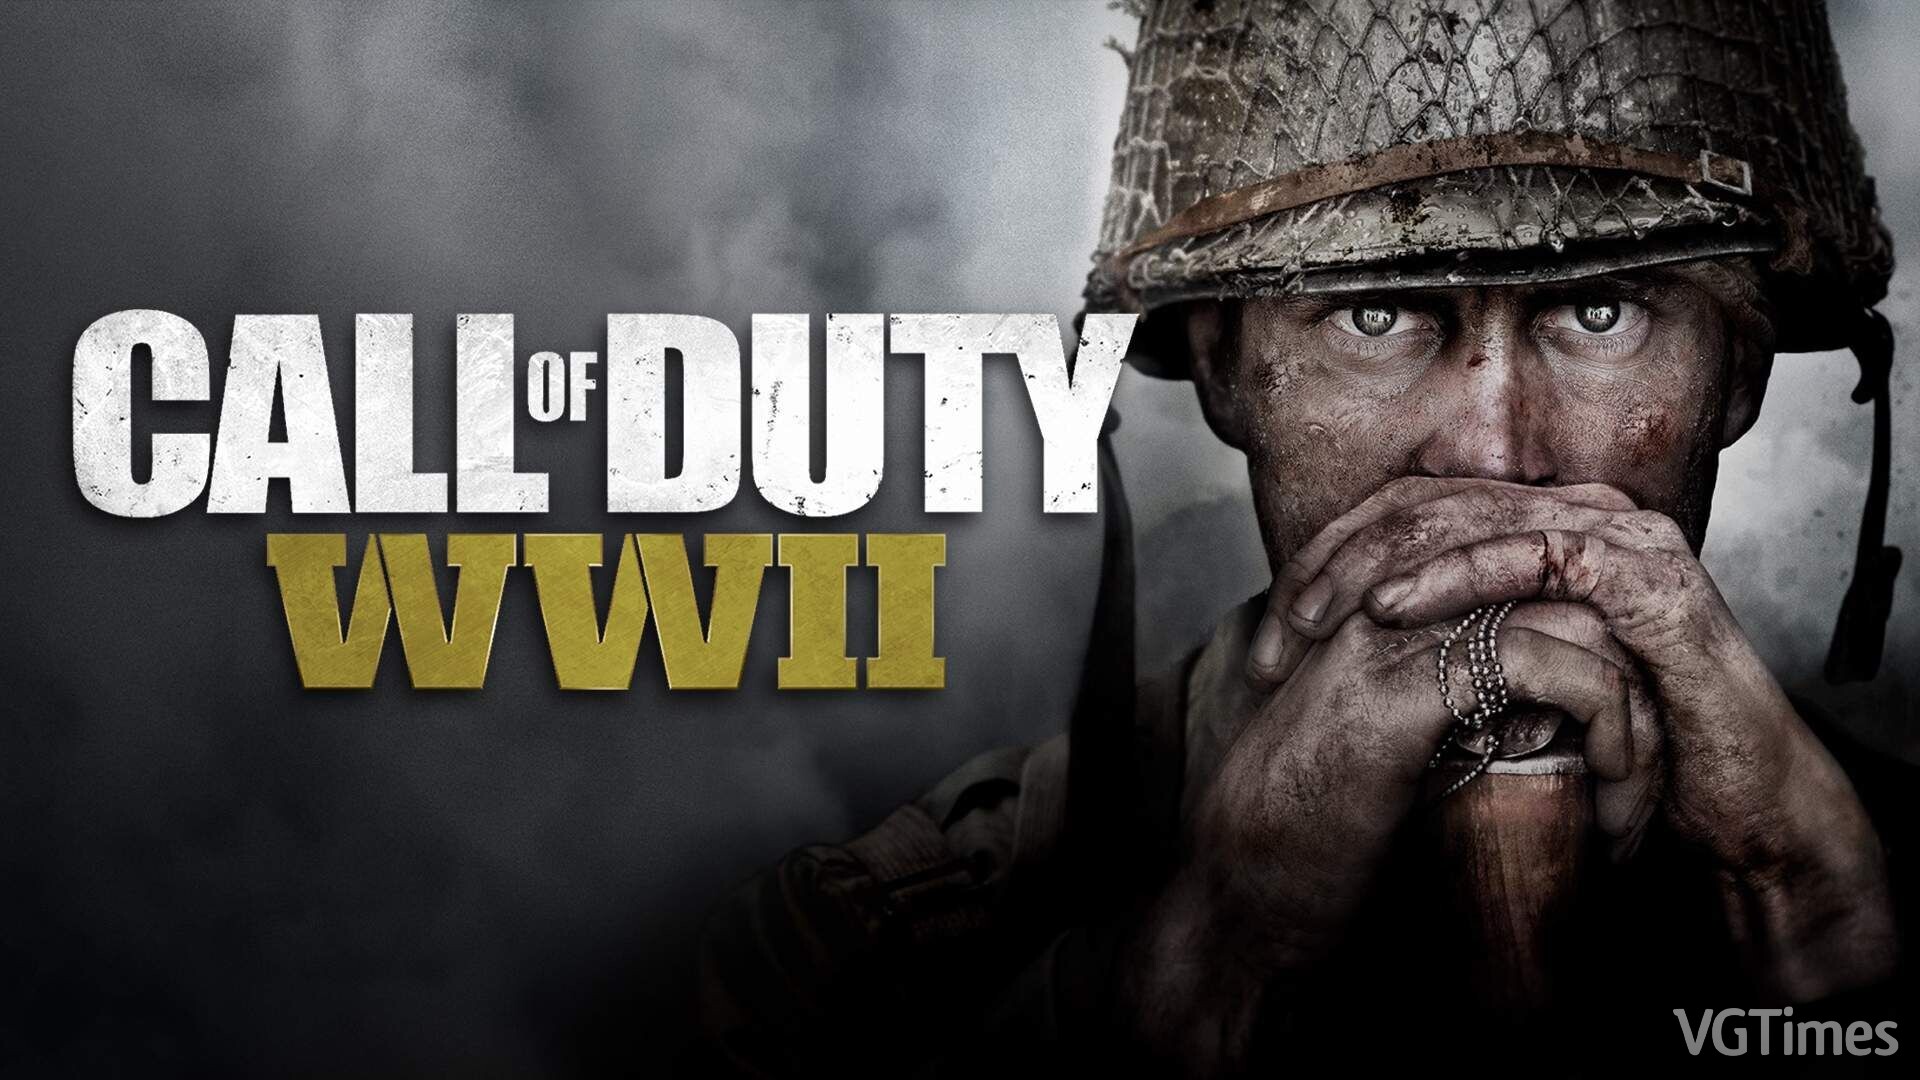 Call of duty ww2 механики. Call of Duty WWII 2. Call of Duty ww2 ps4. Калл оф дути вв2. Call od Duty ww2.